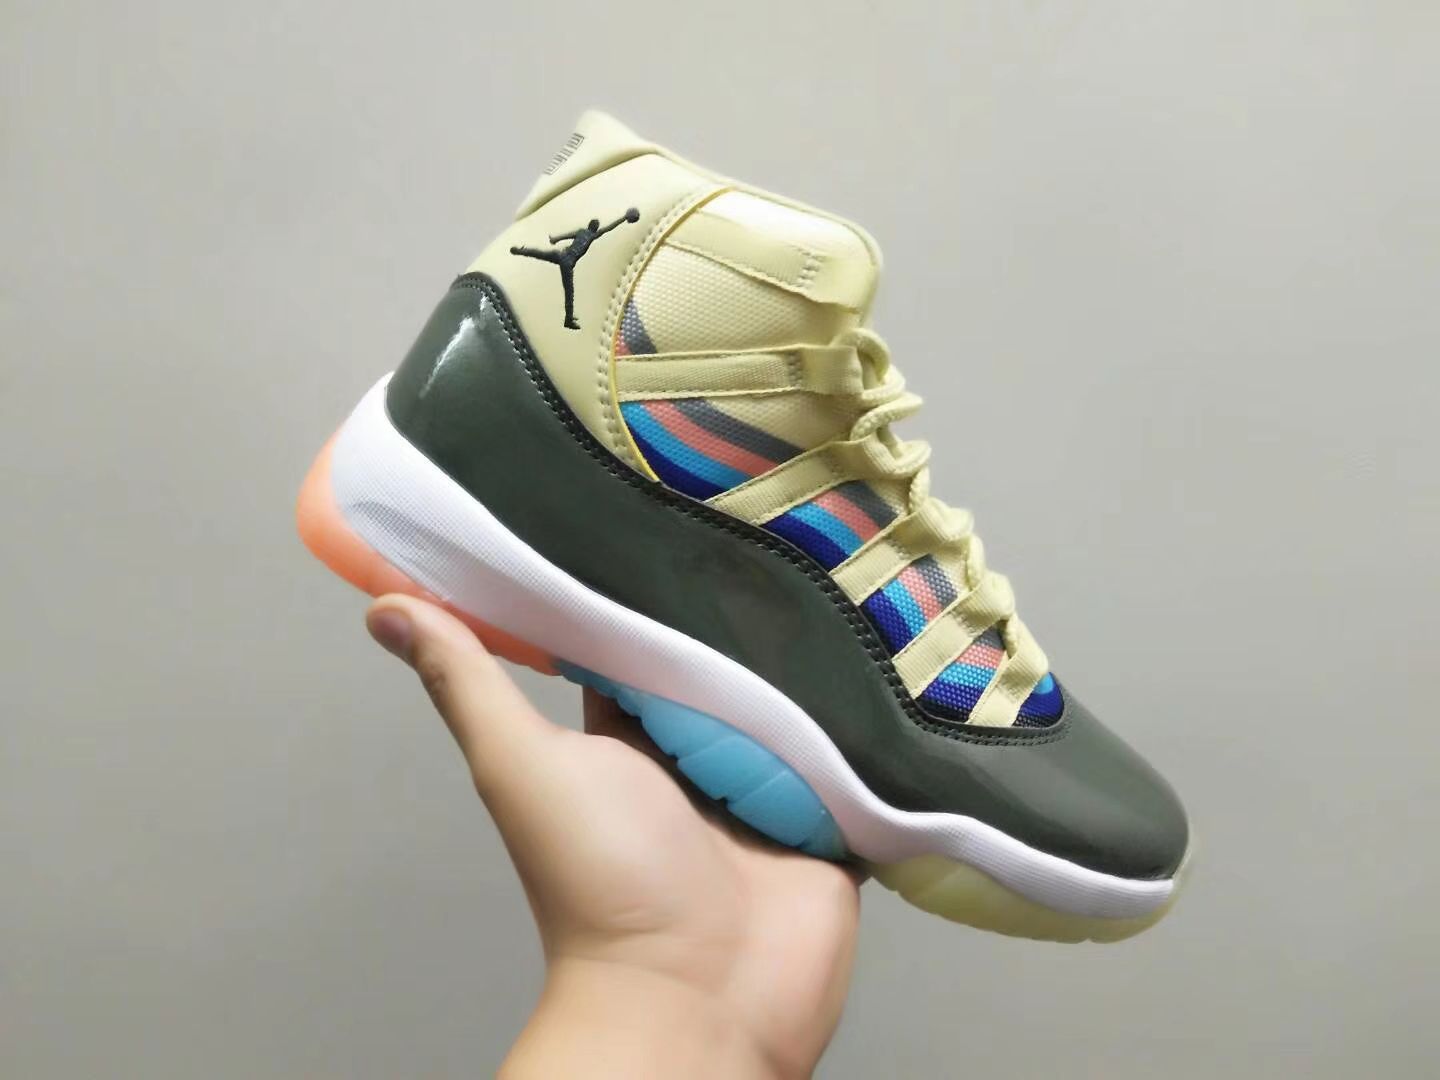 New Air Jordan 11 3D Colorful Shoes